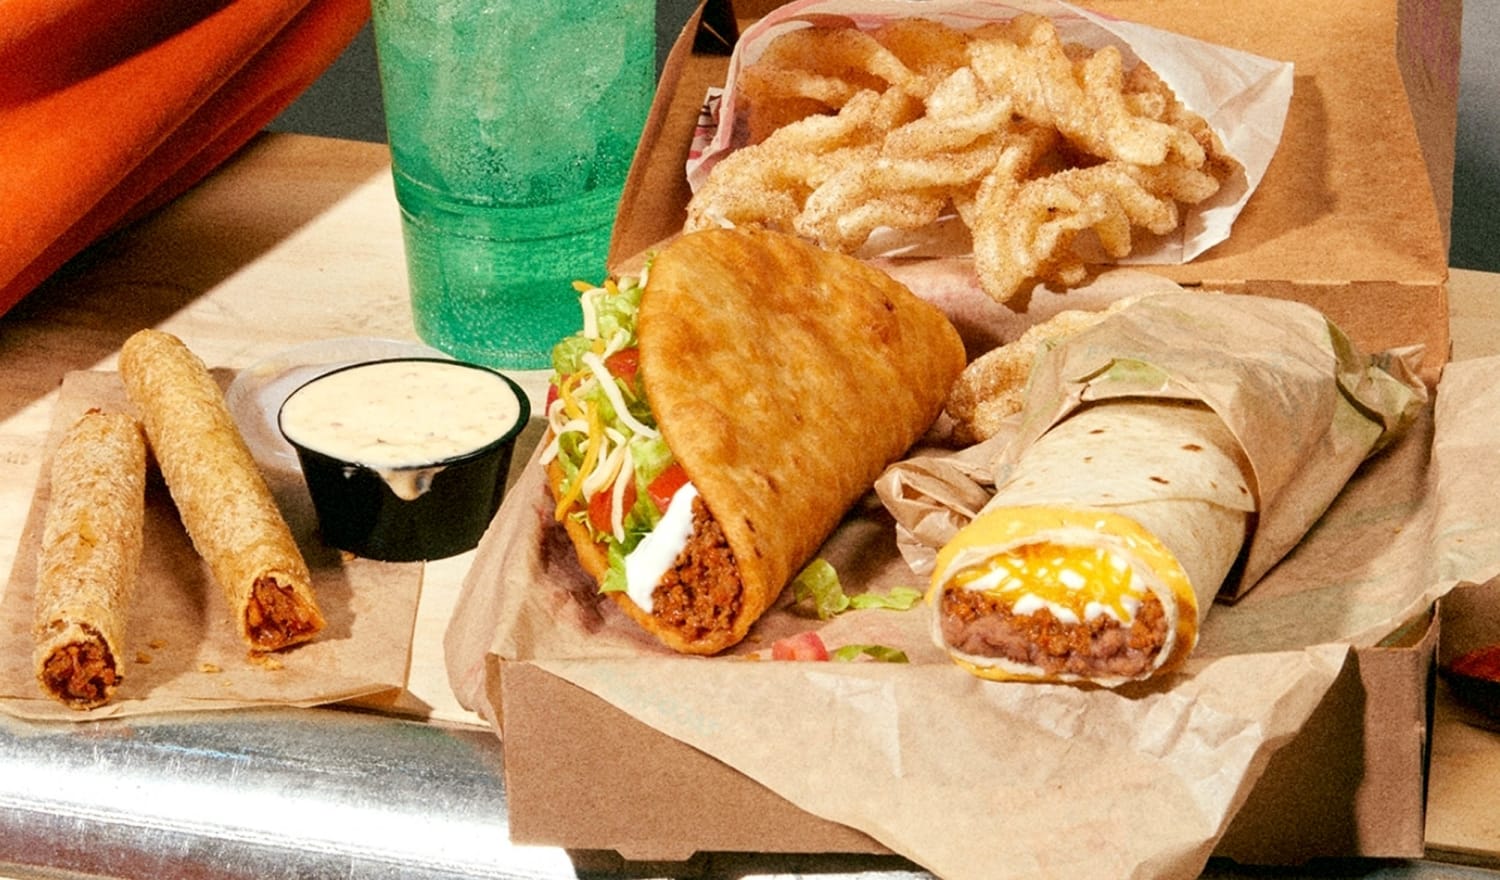 Taco Bell brings back a fan-favorite item after a 4-year hiatus